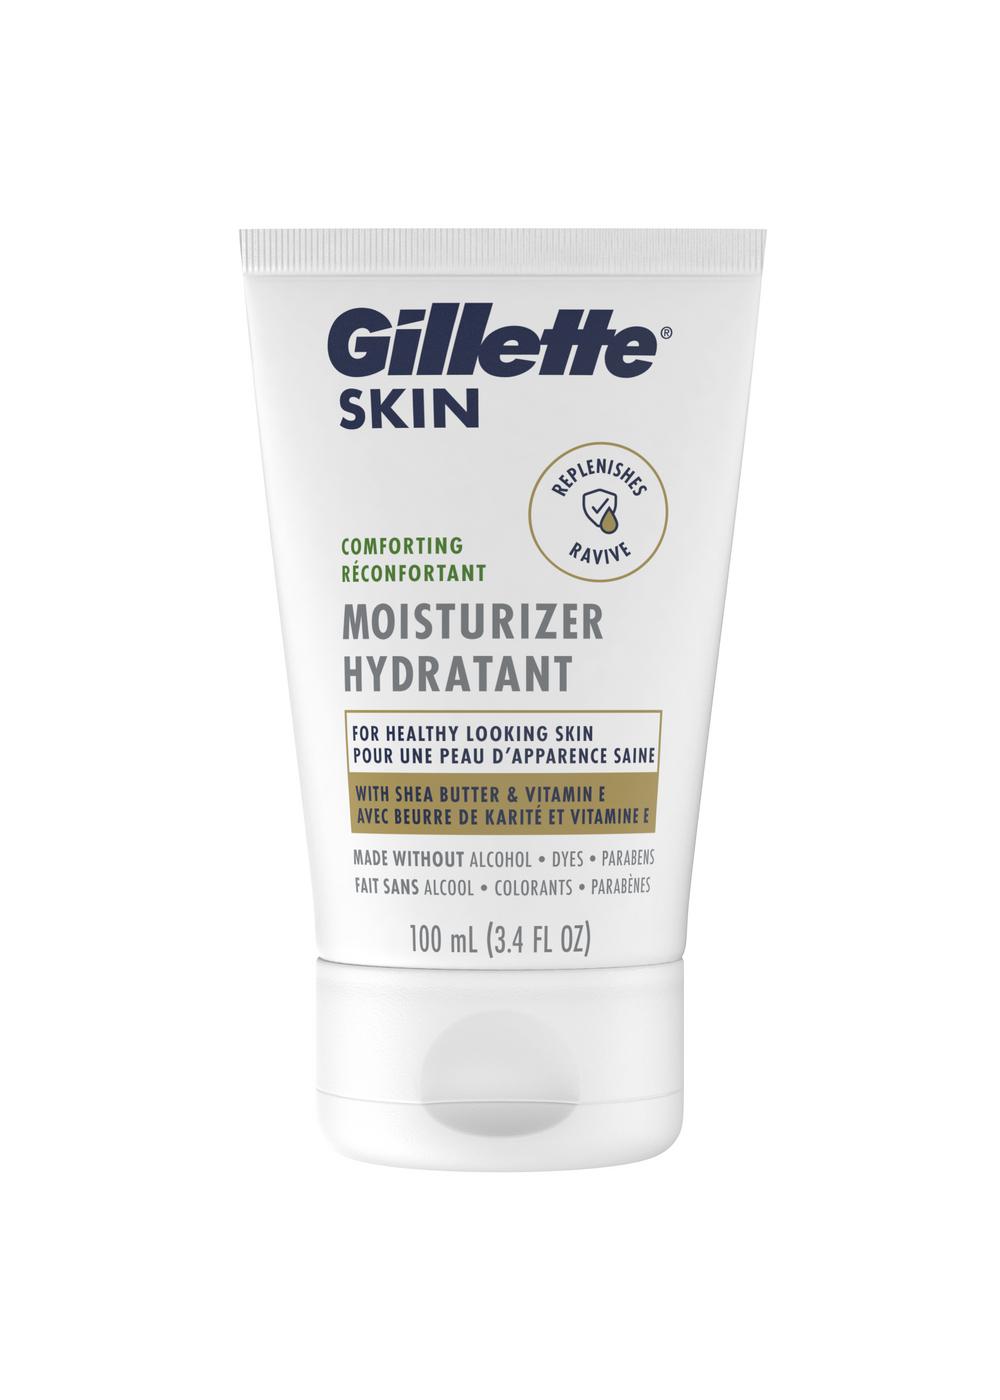 Gillette Skin Comforting Moisturizer Hydratant; image 1 of 2